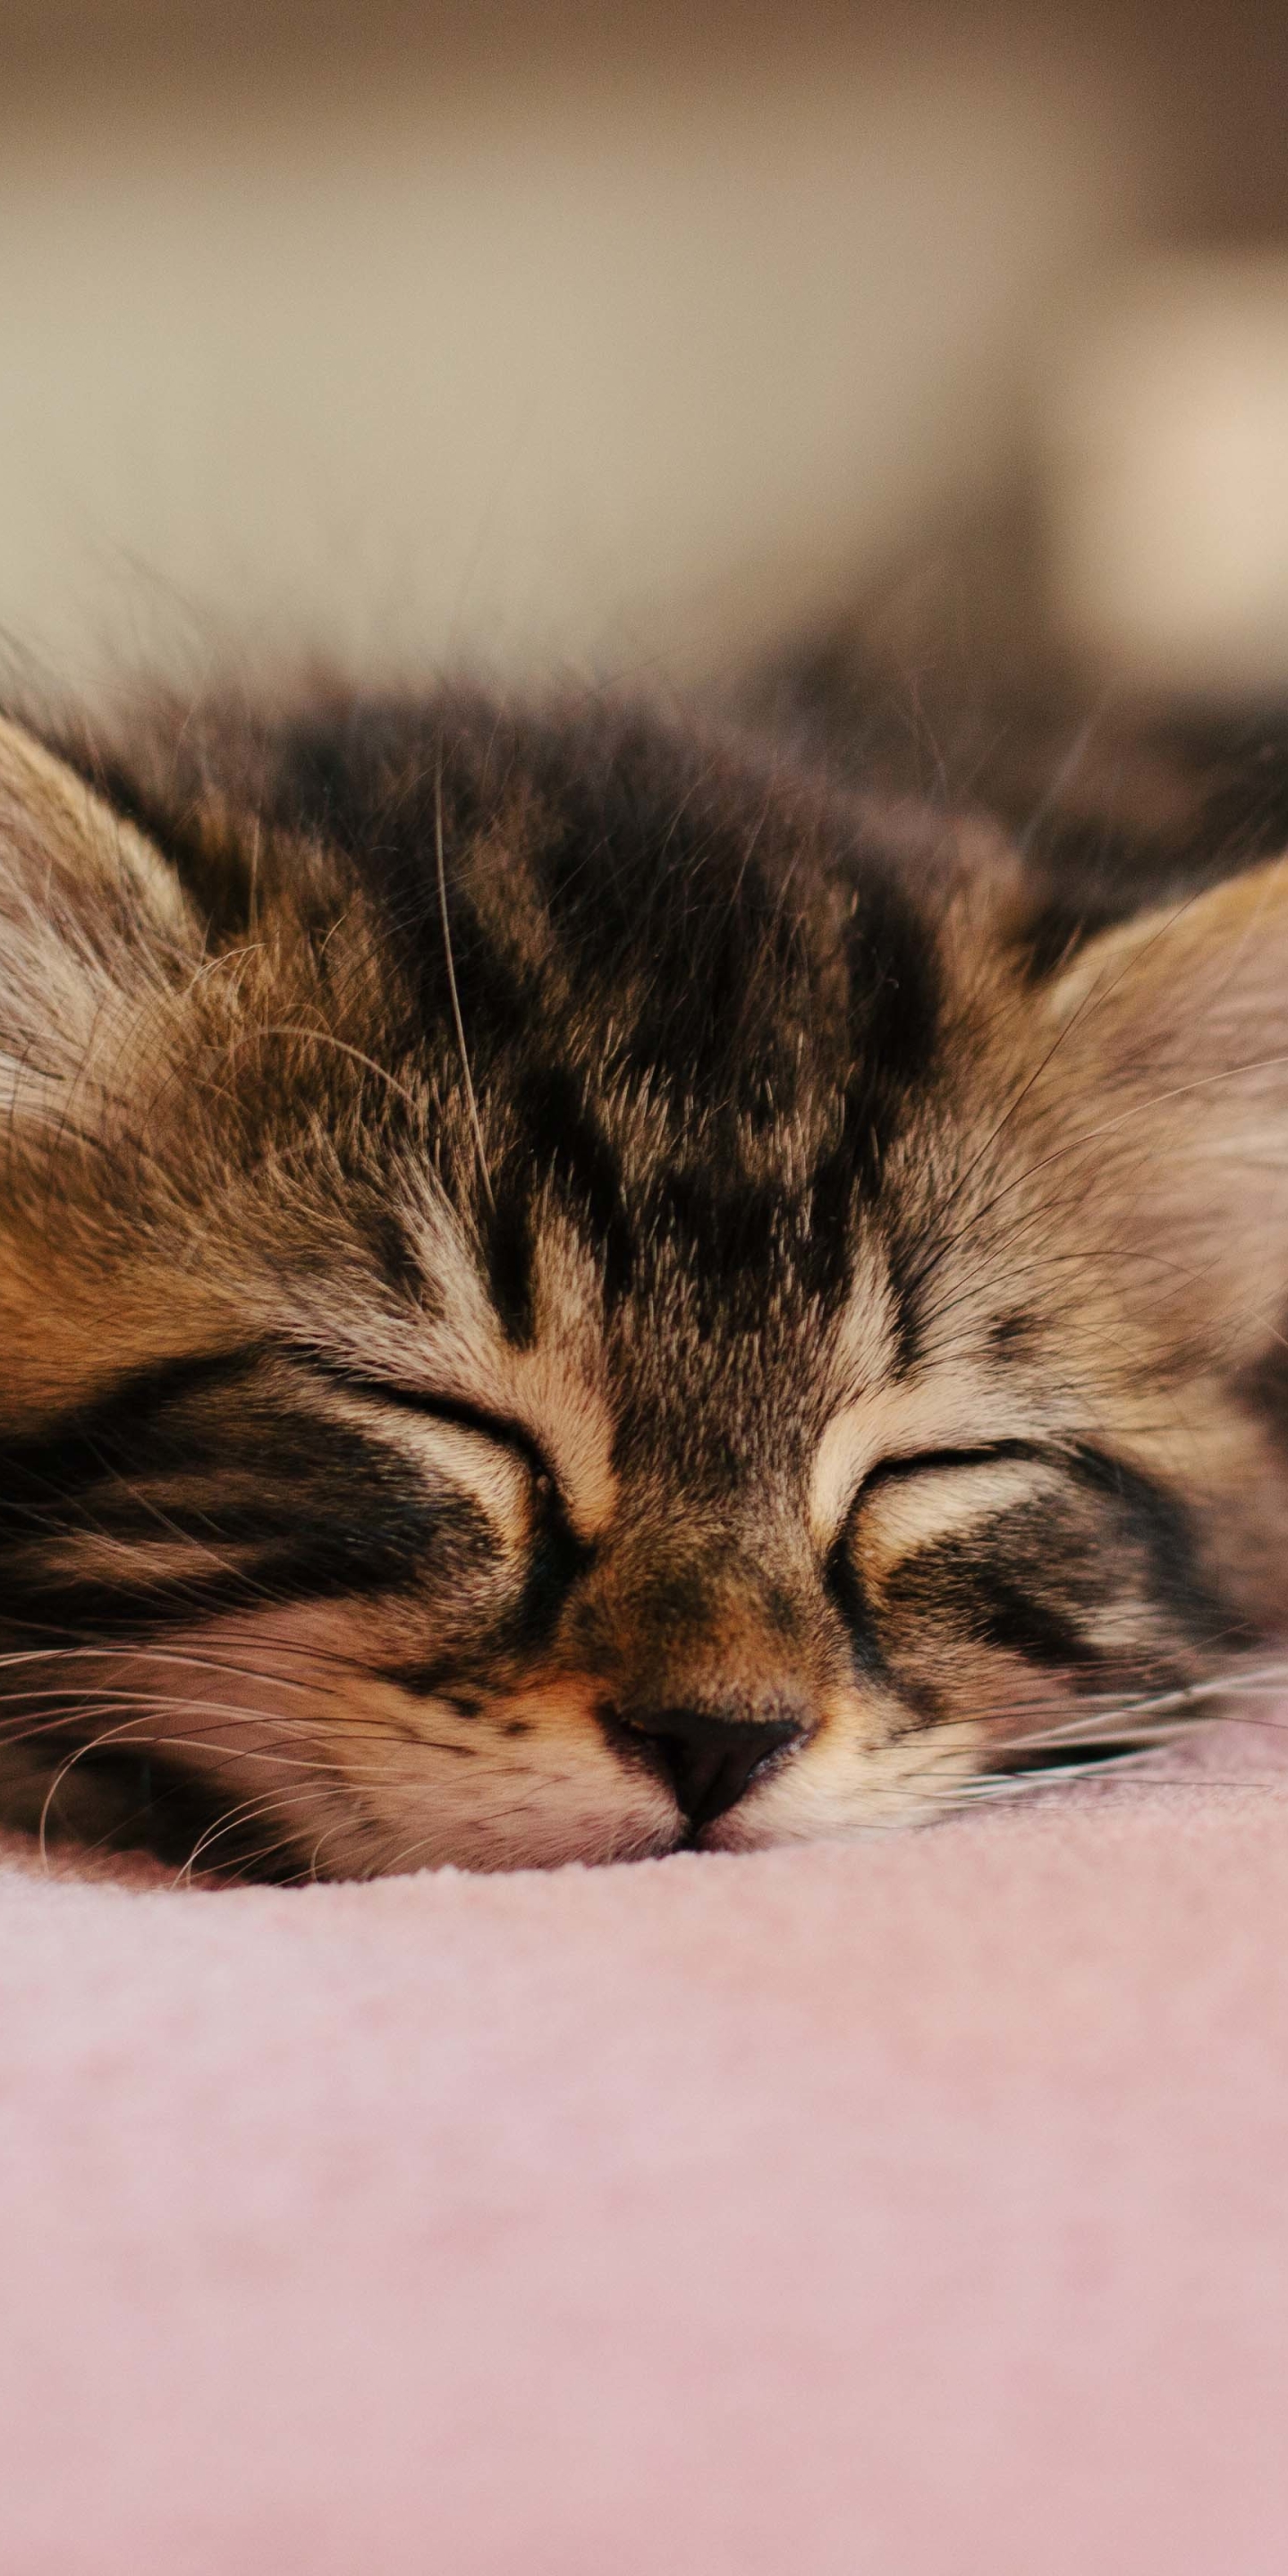 Descarga gratuita de fondo de pantalla para móvil de Animales, Gatos, Gato, Gatito, Dormido, Bebe Animal.